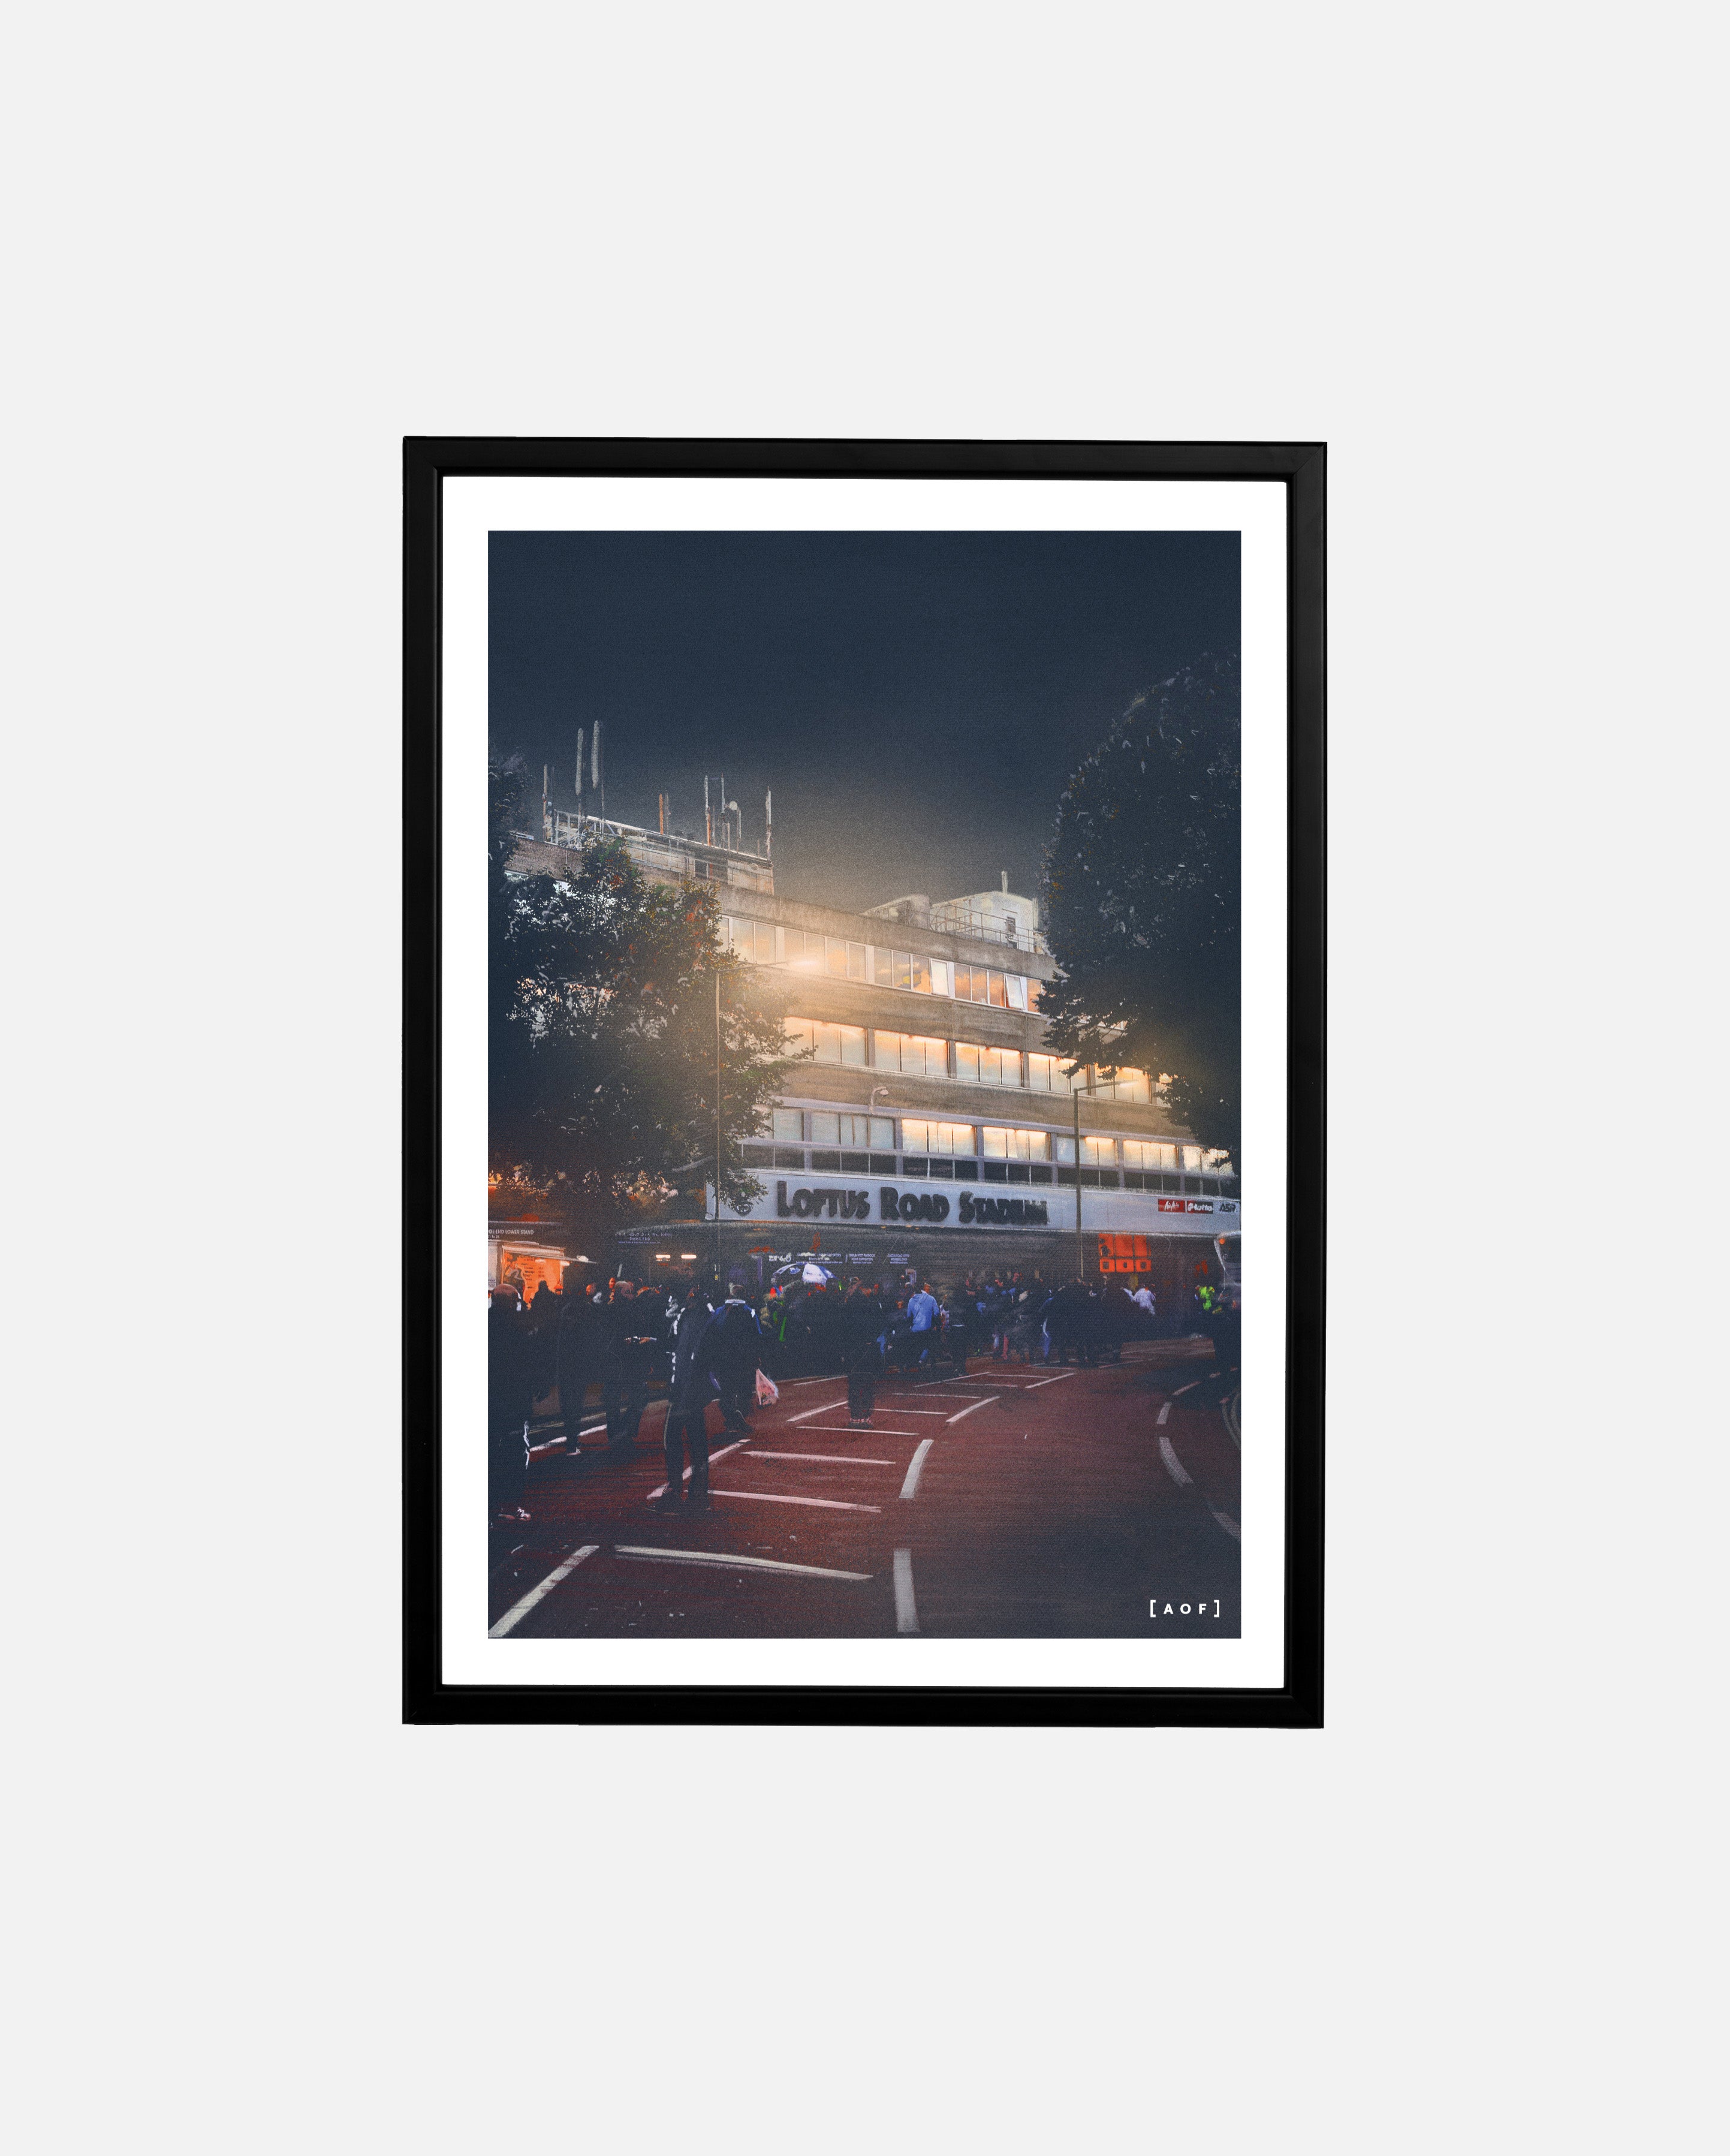 Loftus Road by Night - Print